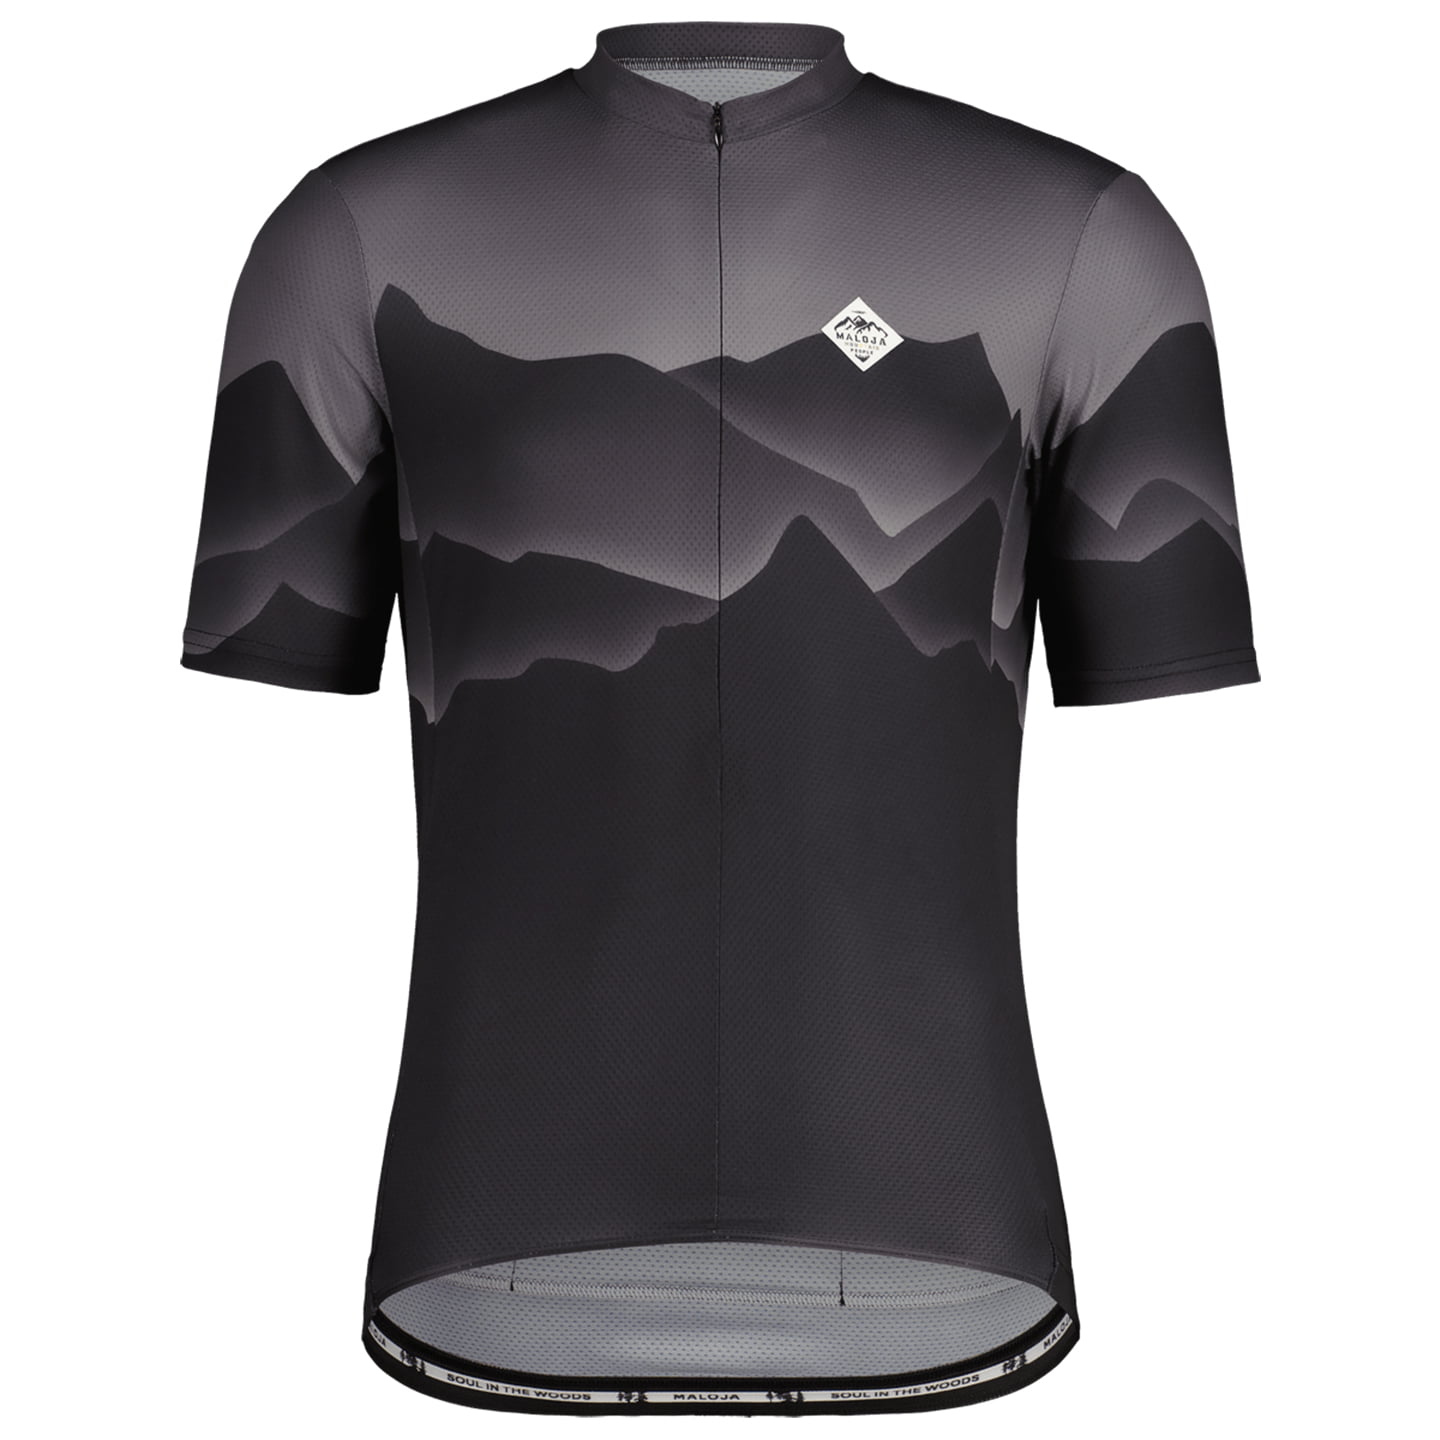 MALOJA ChandolinM. Short Sleeve Jersey Short Sleeve Jersey, for men, size S, Cycling jersey, Cycling clothing